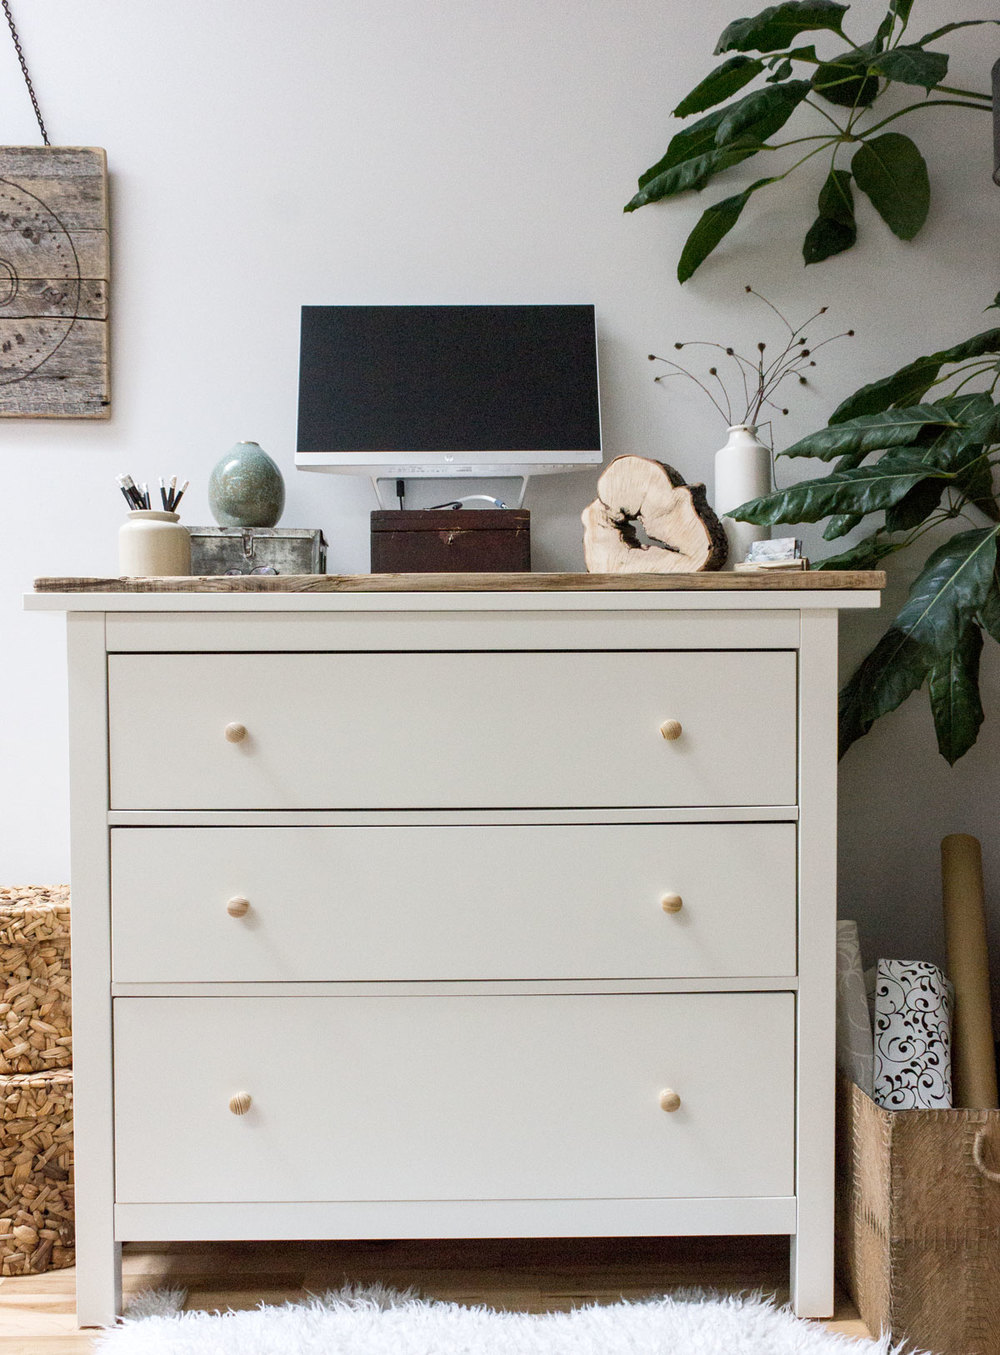 IKEA dresser as standing desk - simple DIY hack